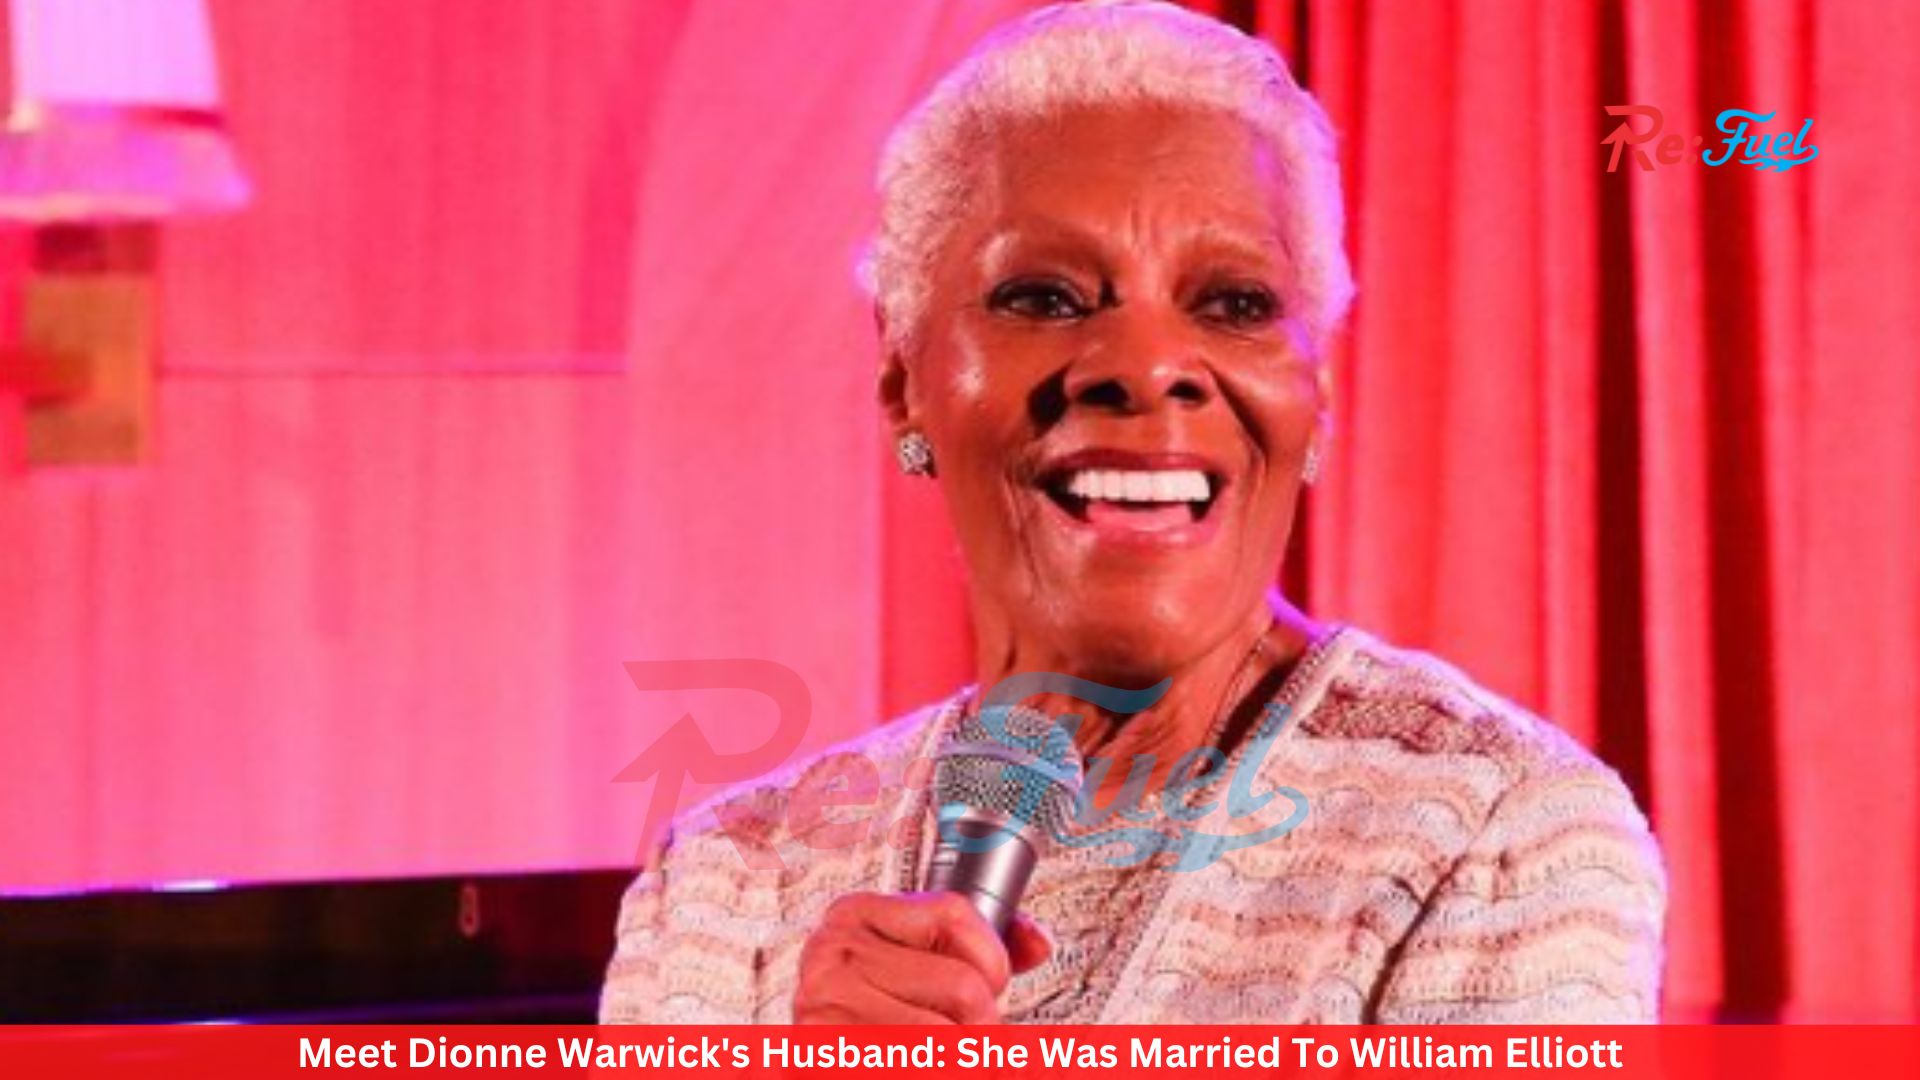 Meet Dionne Warwick's Husband: She Was Married To William Elliott